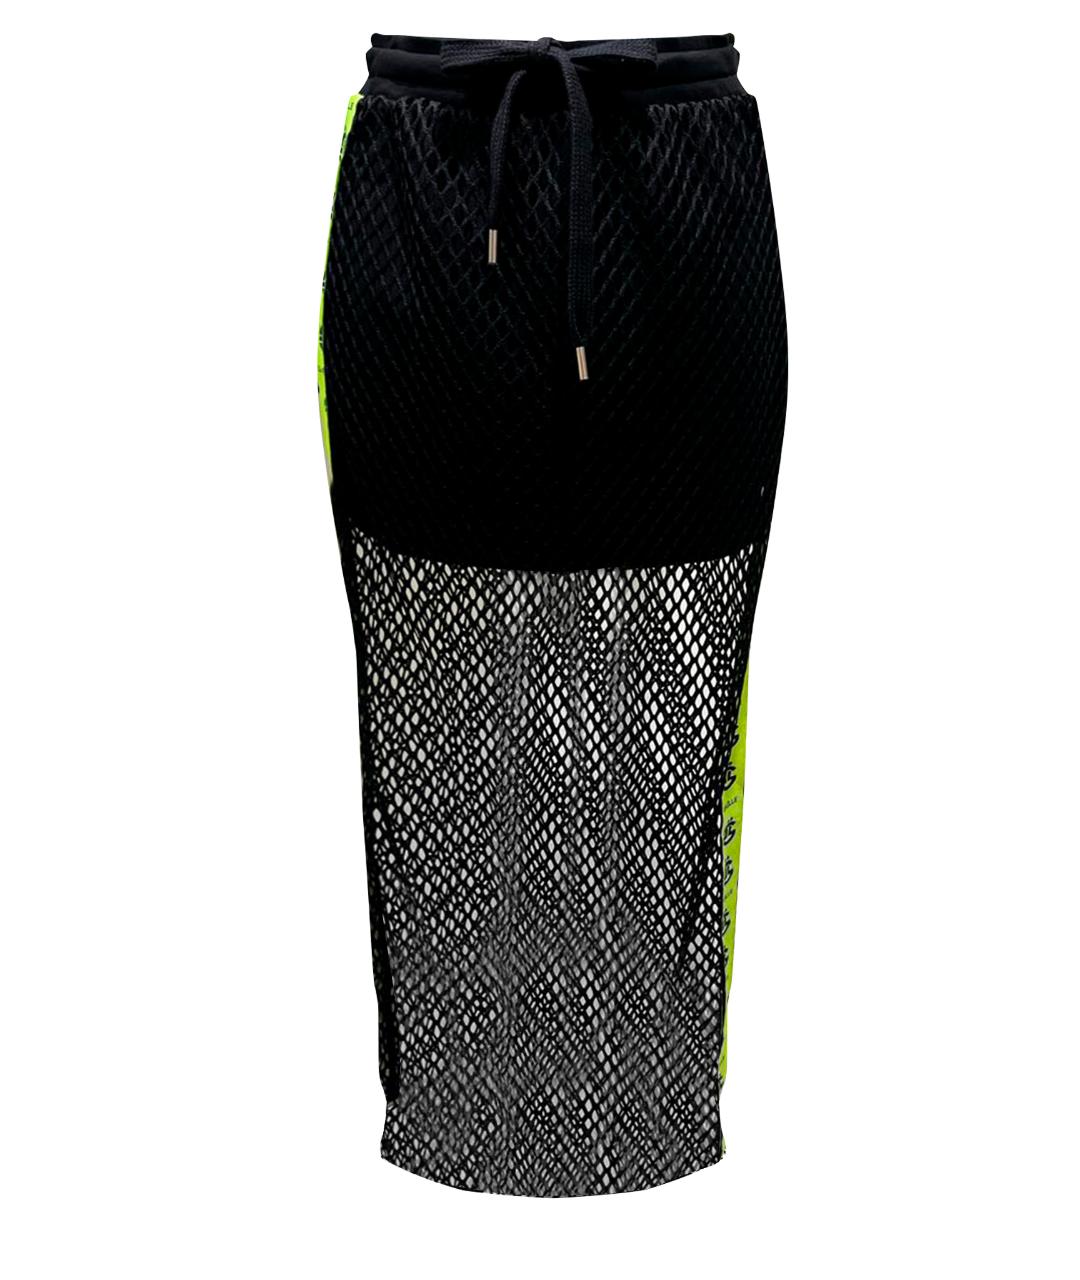 GAELLE BONHEUR Черная сетчатая юбка макси, фото 1